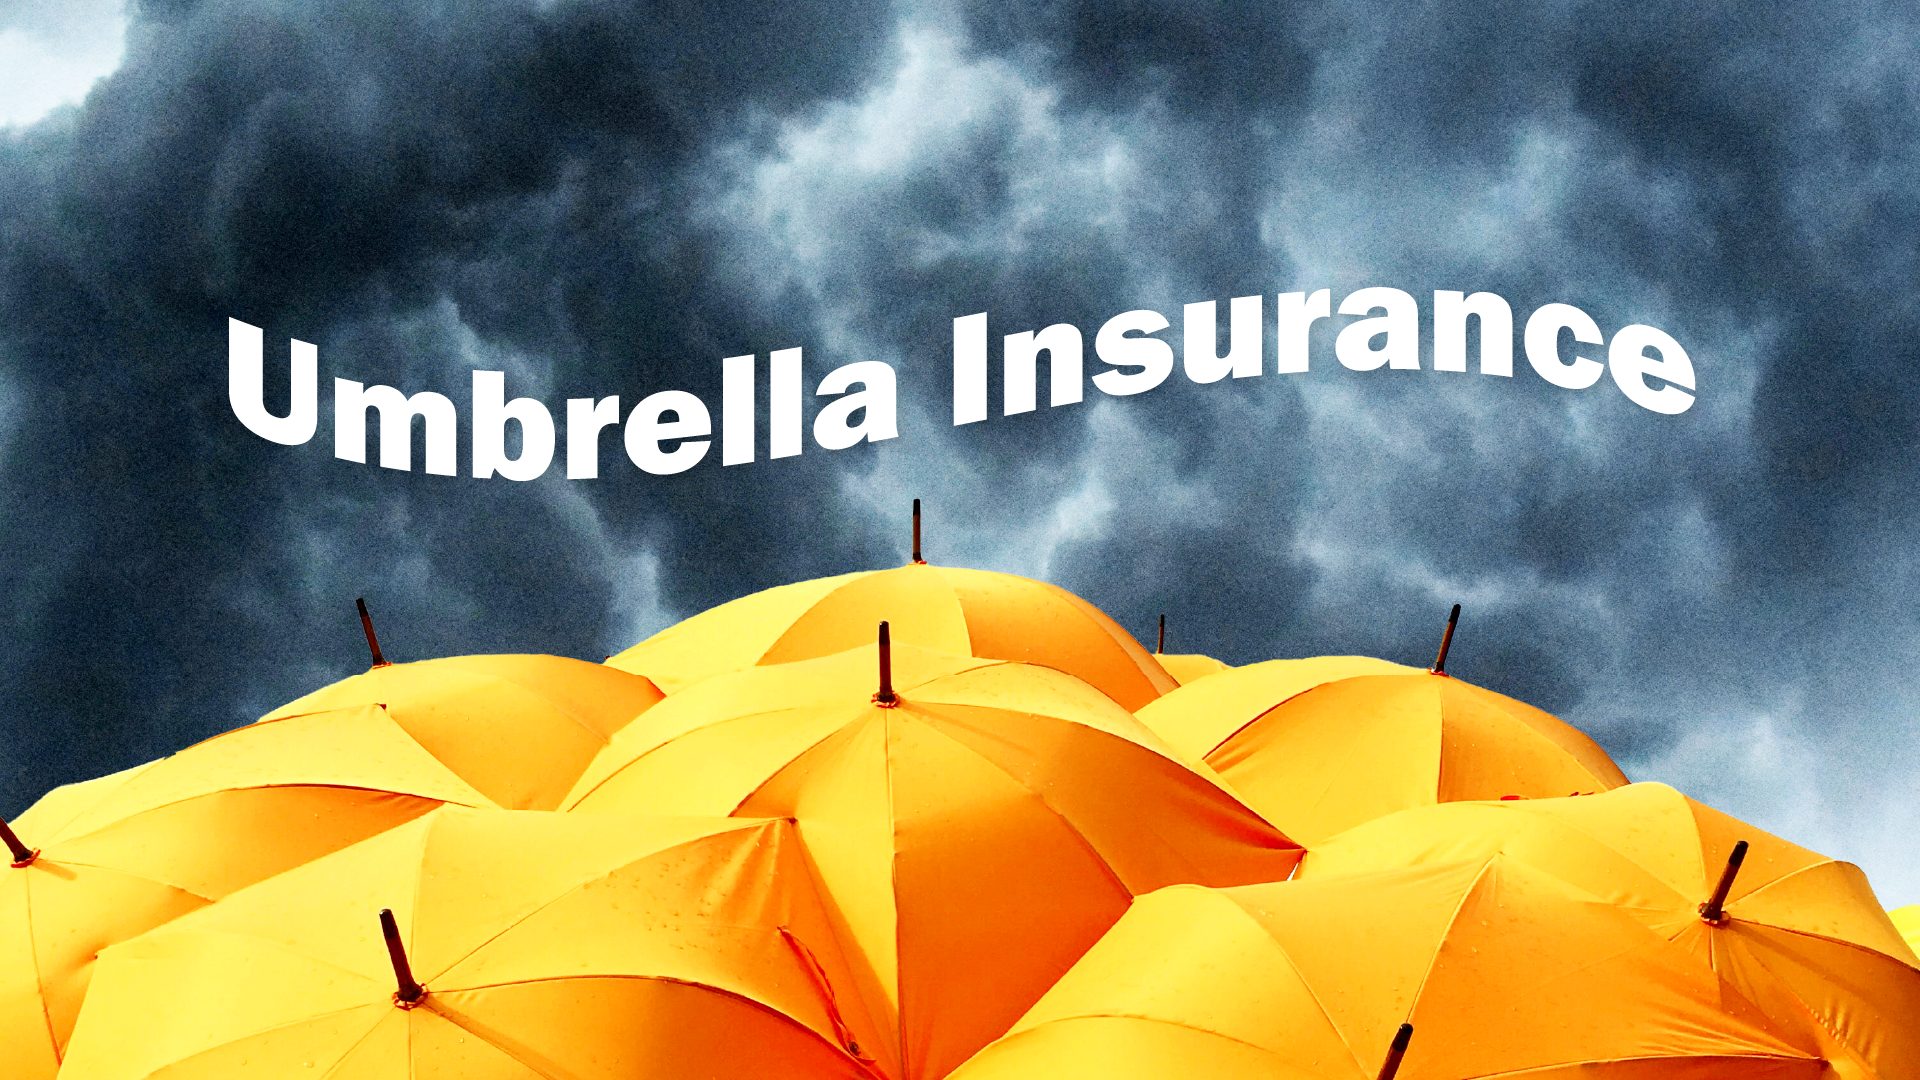 umbrella insurance, life insurance, yellow umbrellas